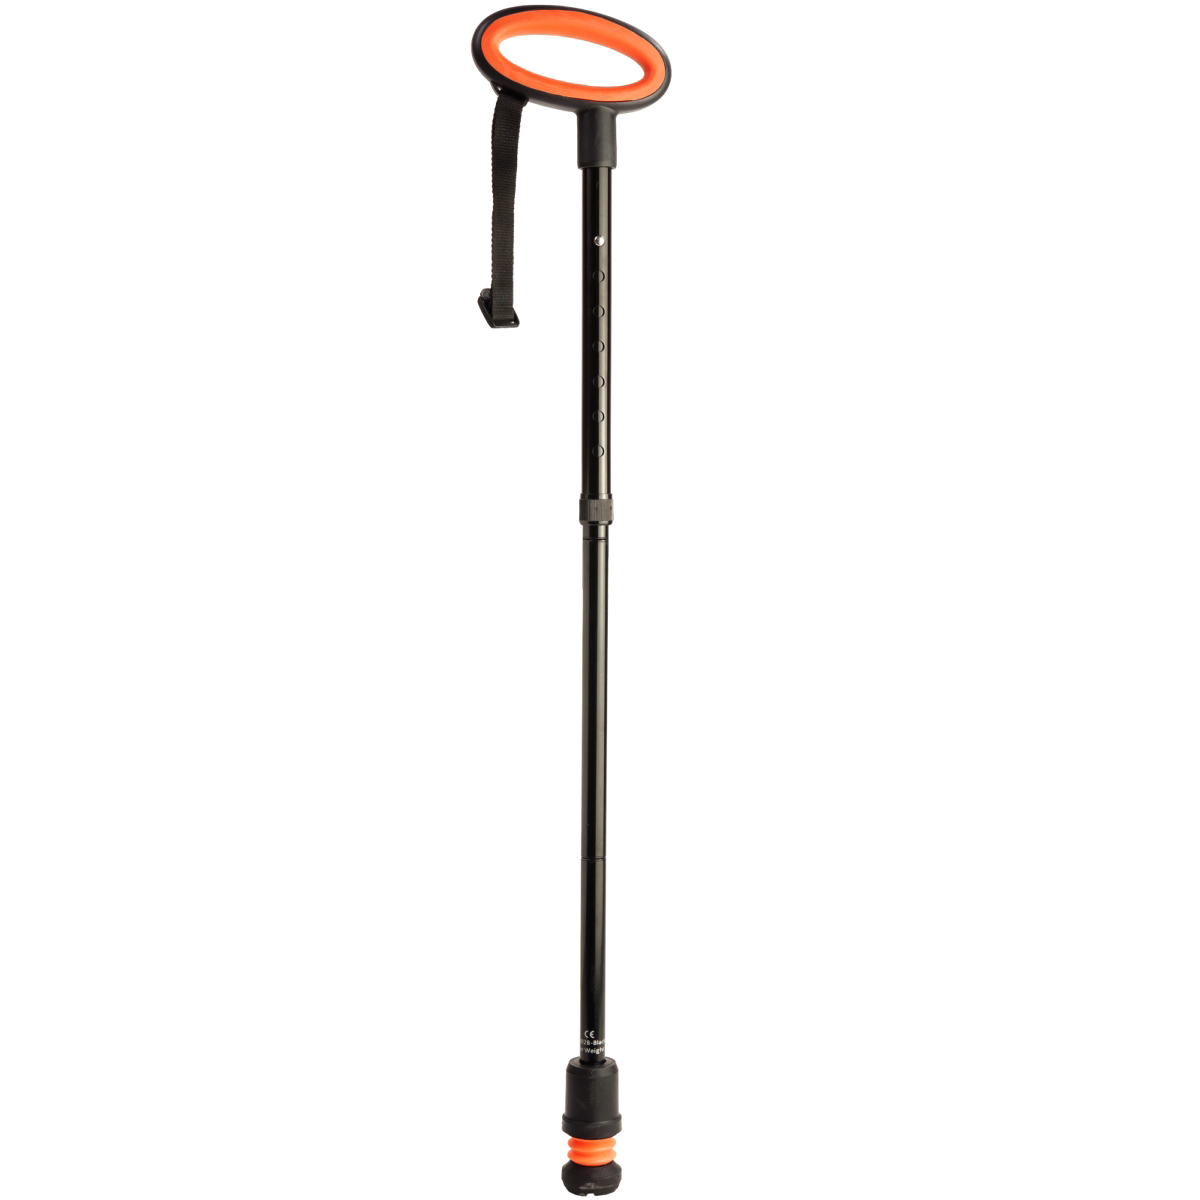 A single black Flexyfoot Premium Oval Handle Folding Walking Stick